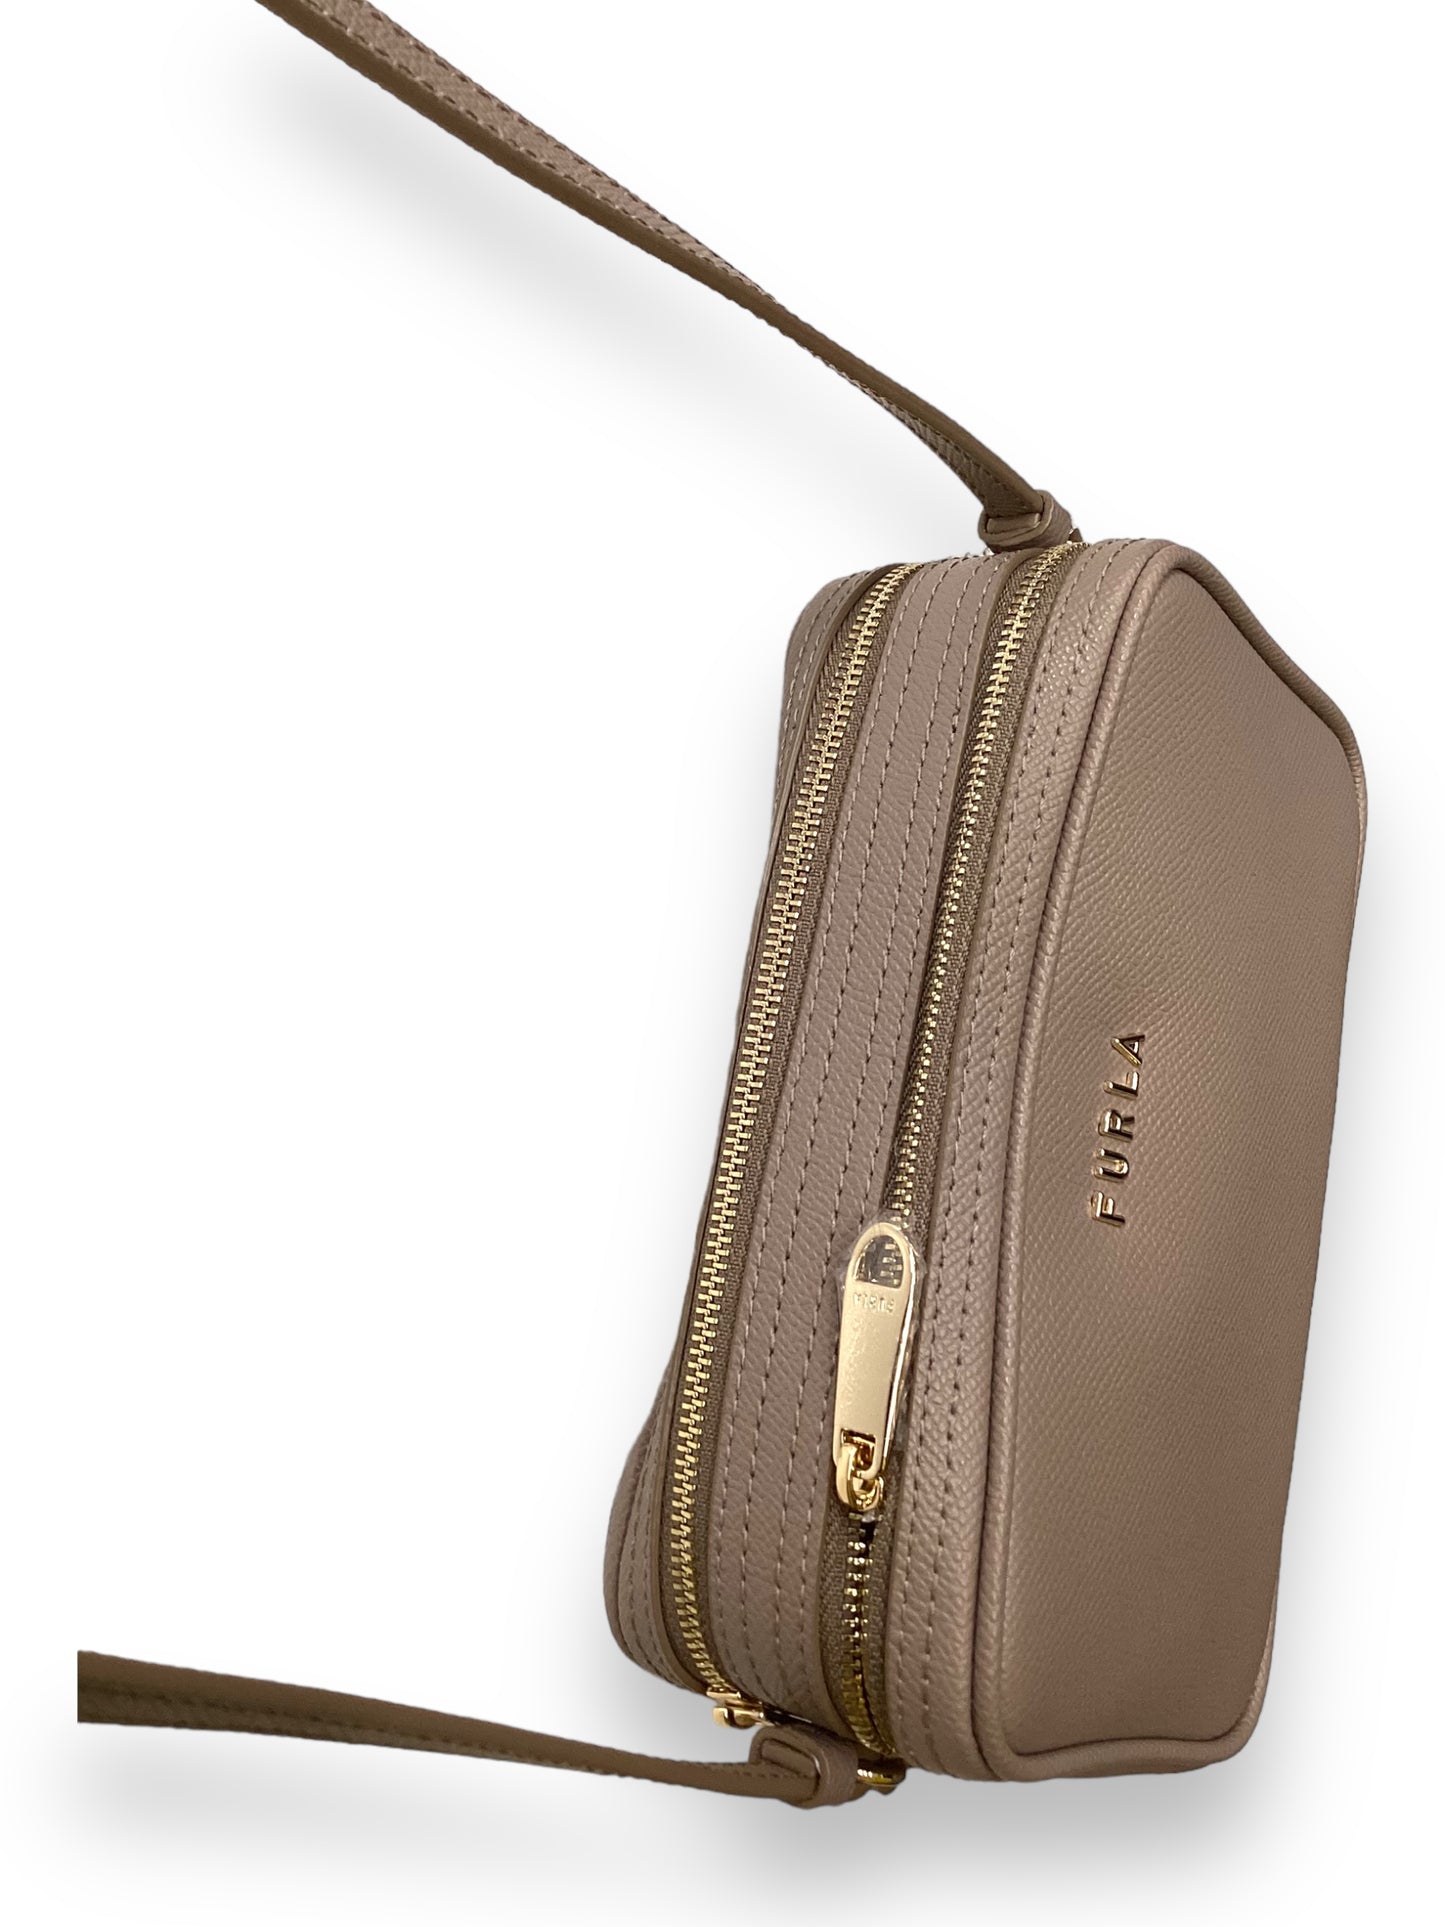 Handbag Designer By Furla  Size: Small